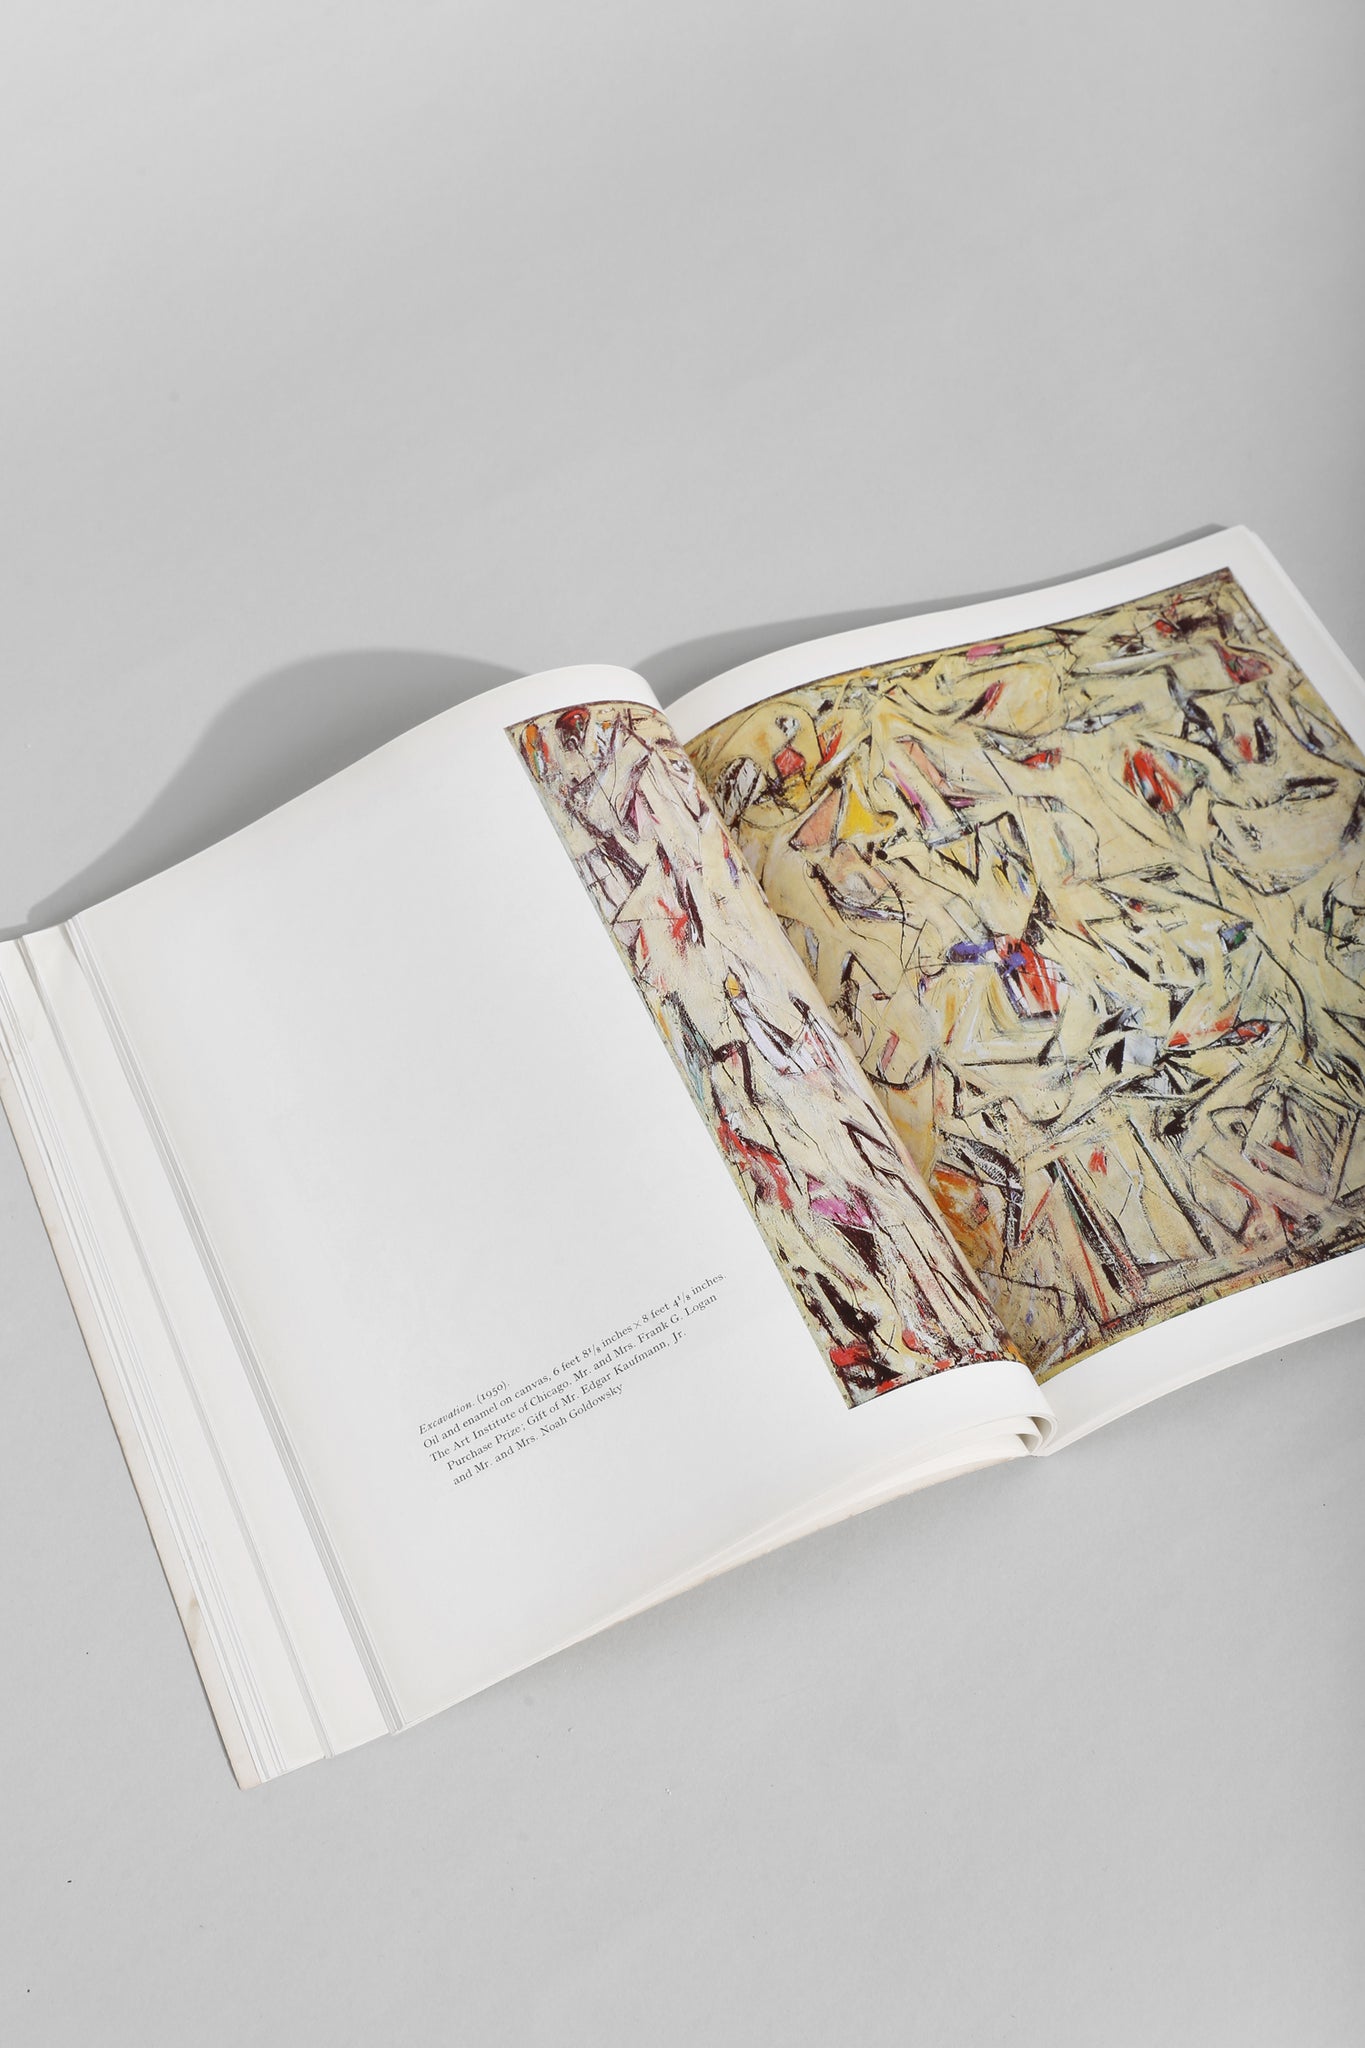 Willem de Kooning Book